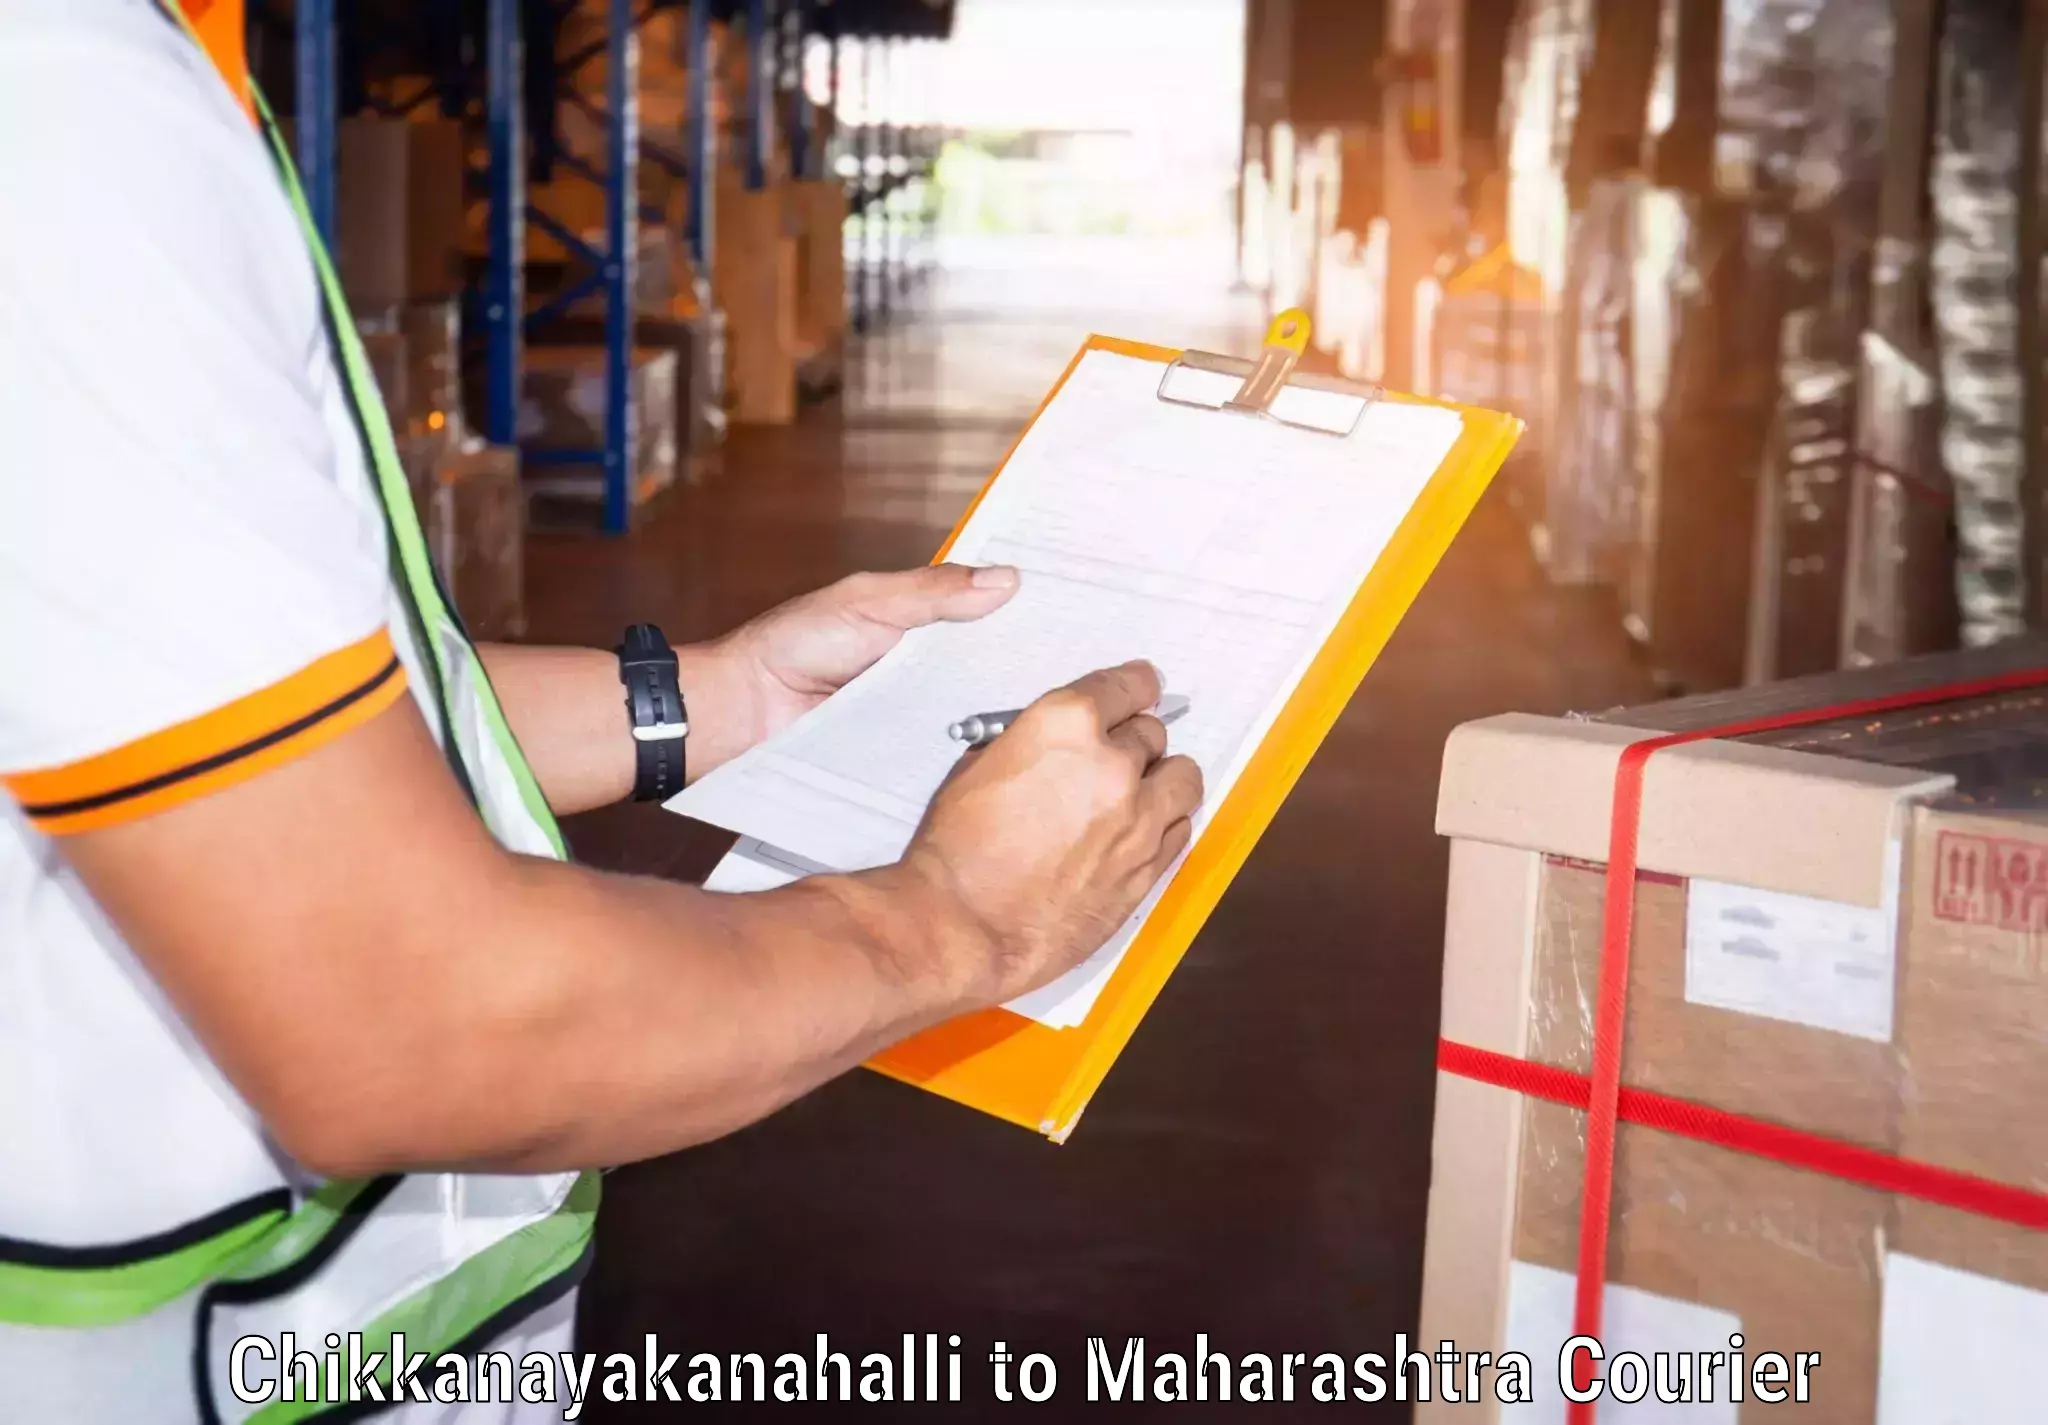 Personal parcel delivery in Chikkanayakanahalli to Ganpatipule